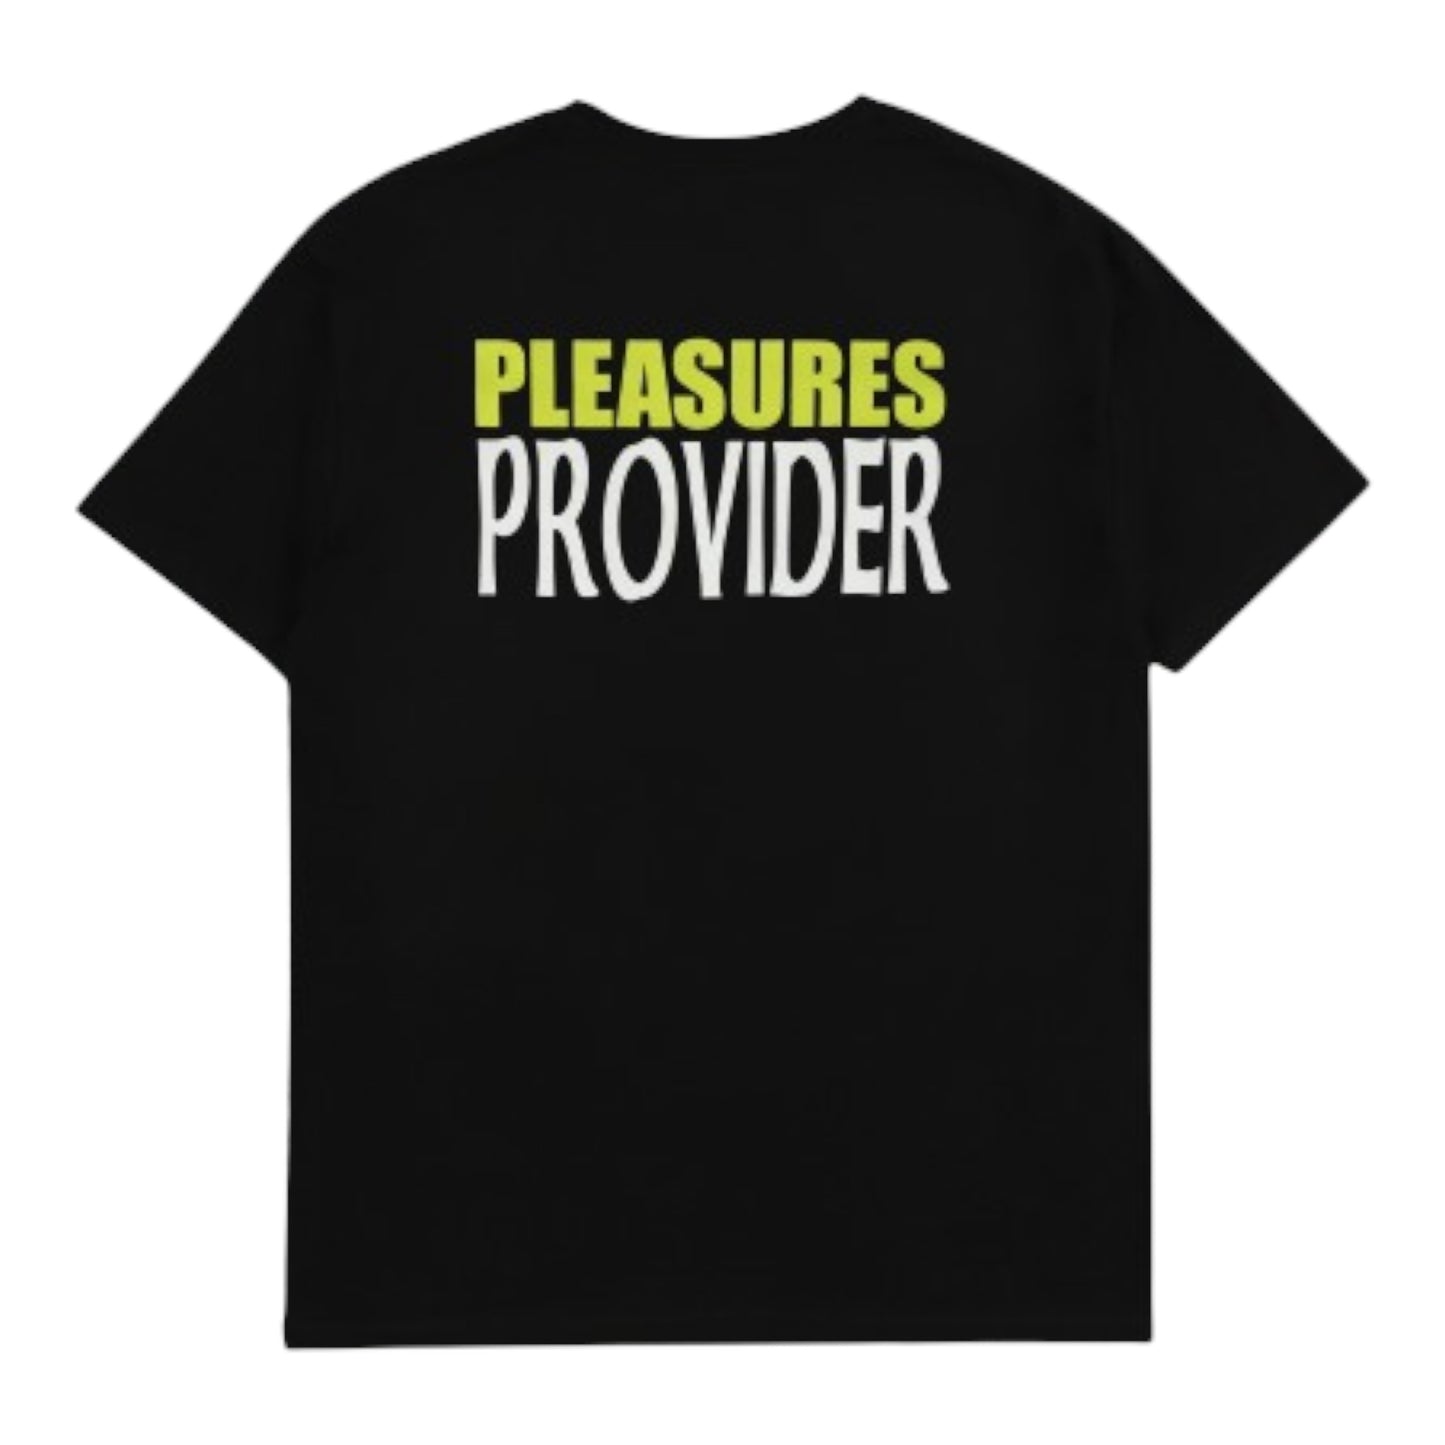 PLEASURES PROVIDER T-SHIRT